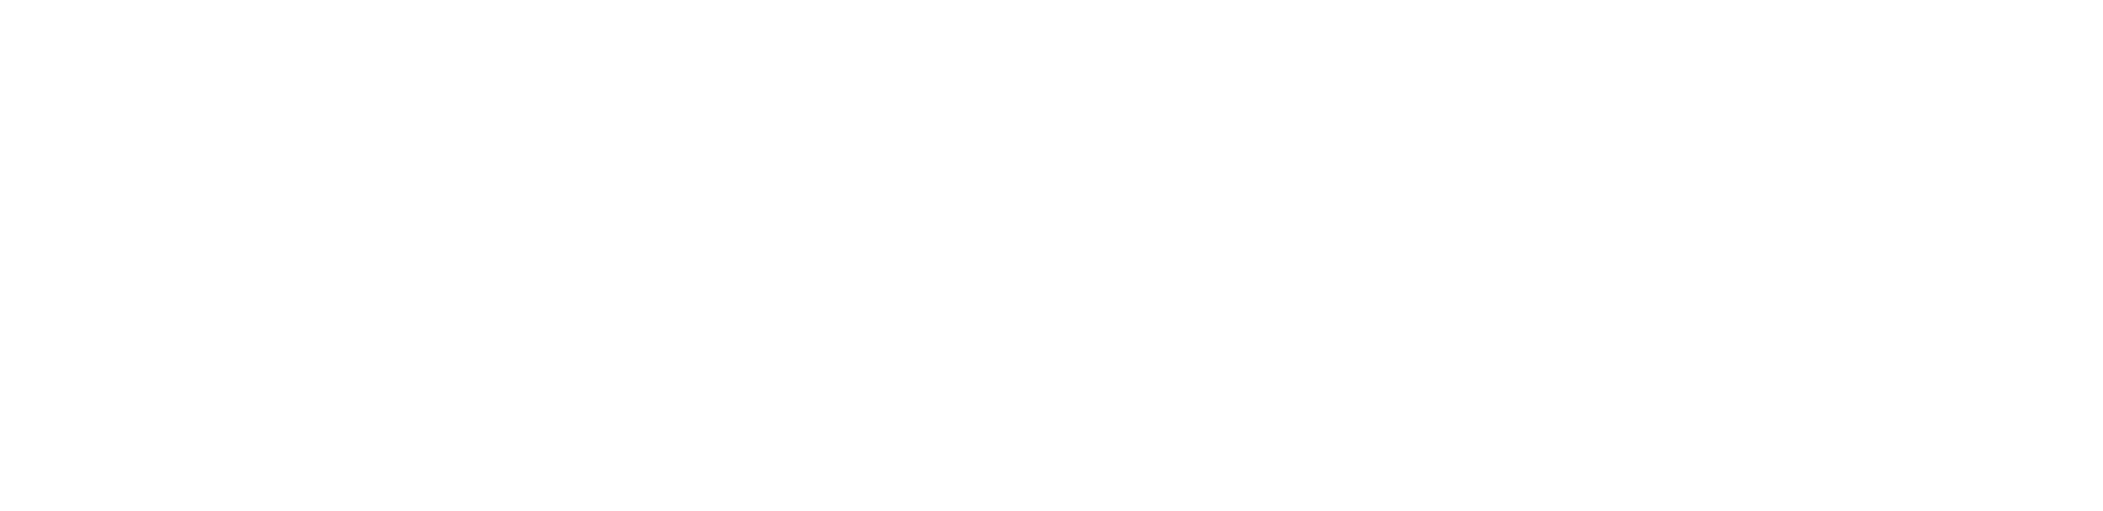 https://shipcfl.com/wp-content/uploads/2019/03/footer-logo.png